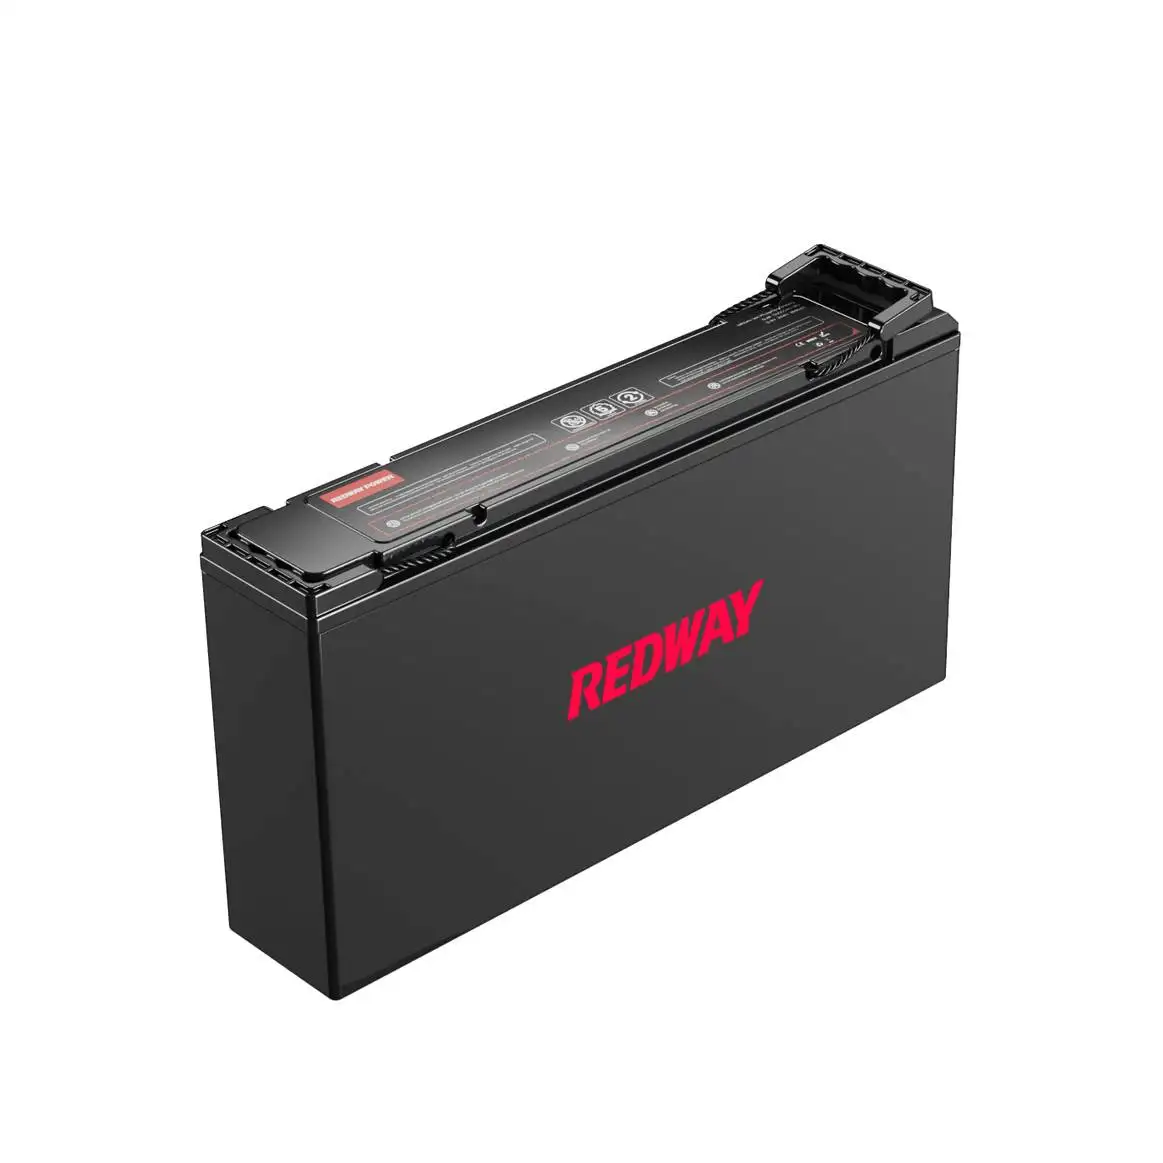 redway-12v150ah-eu 12V 150Ah Lithium Battery (EU)